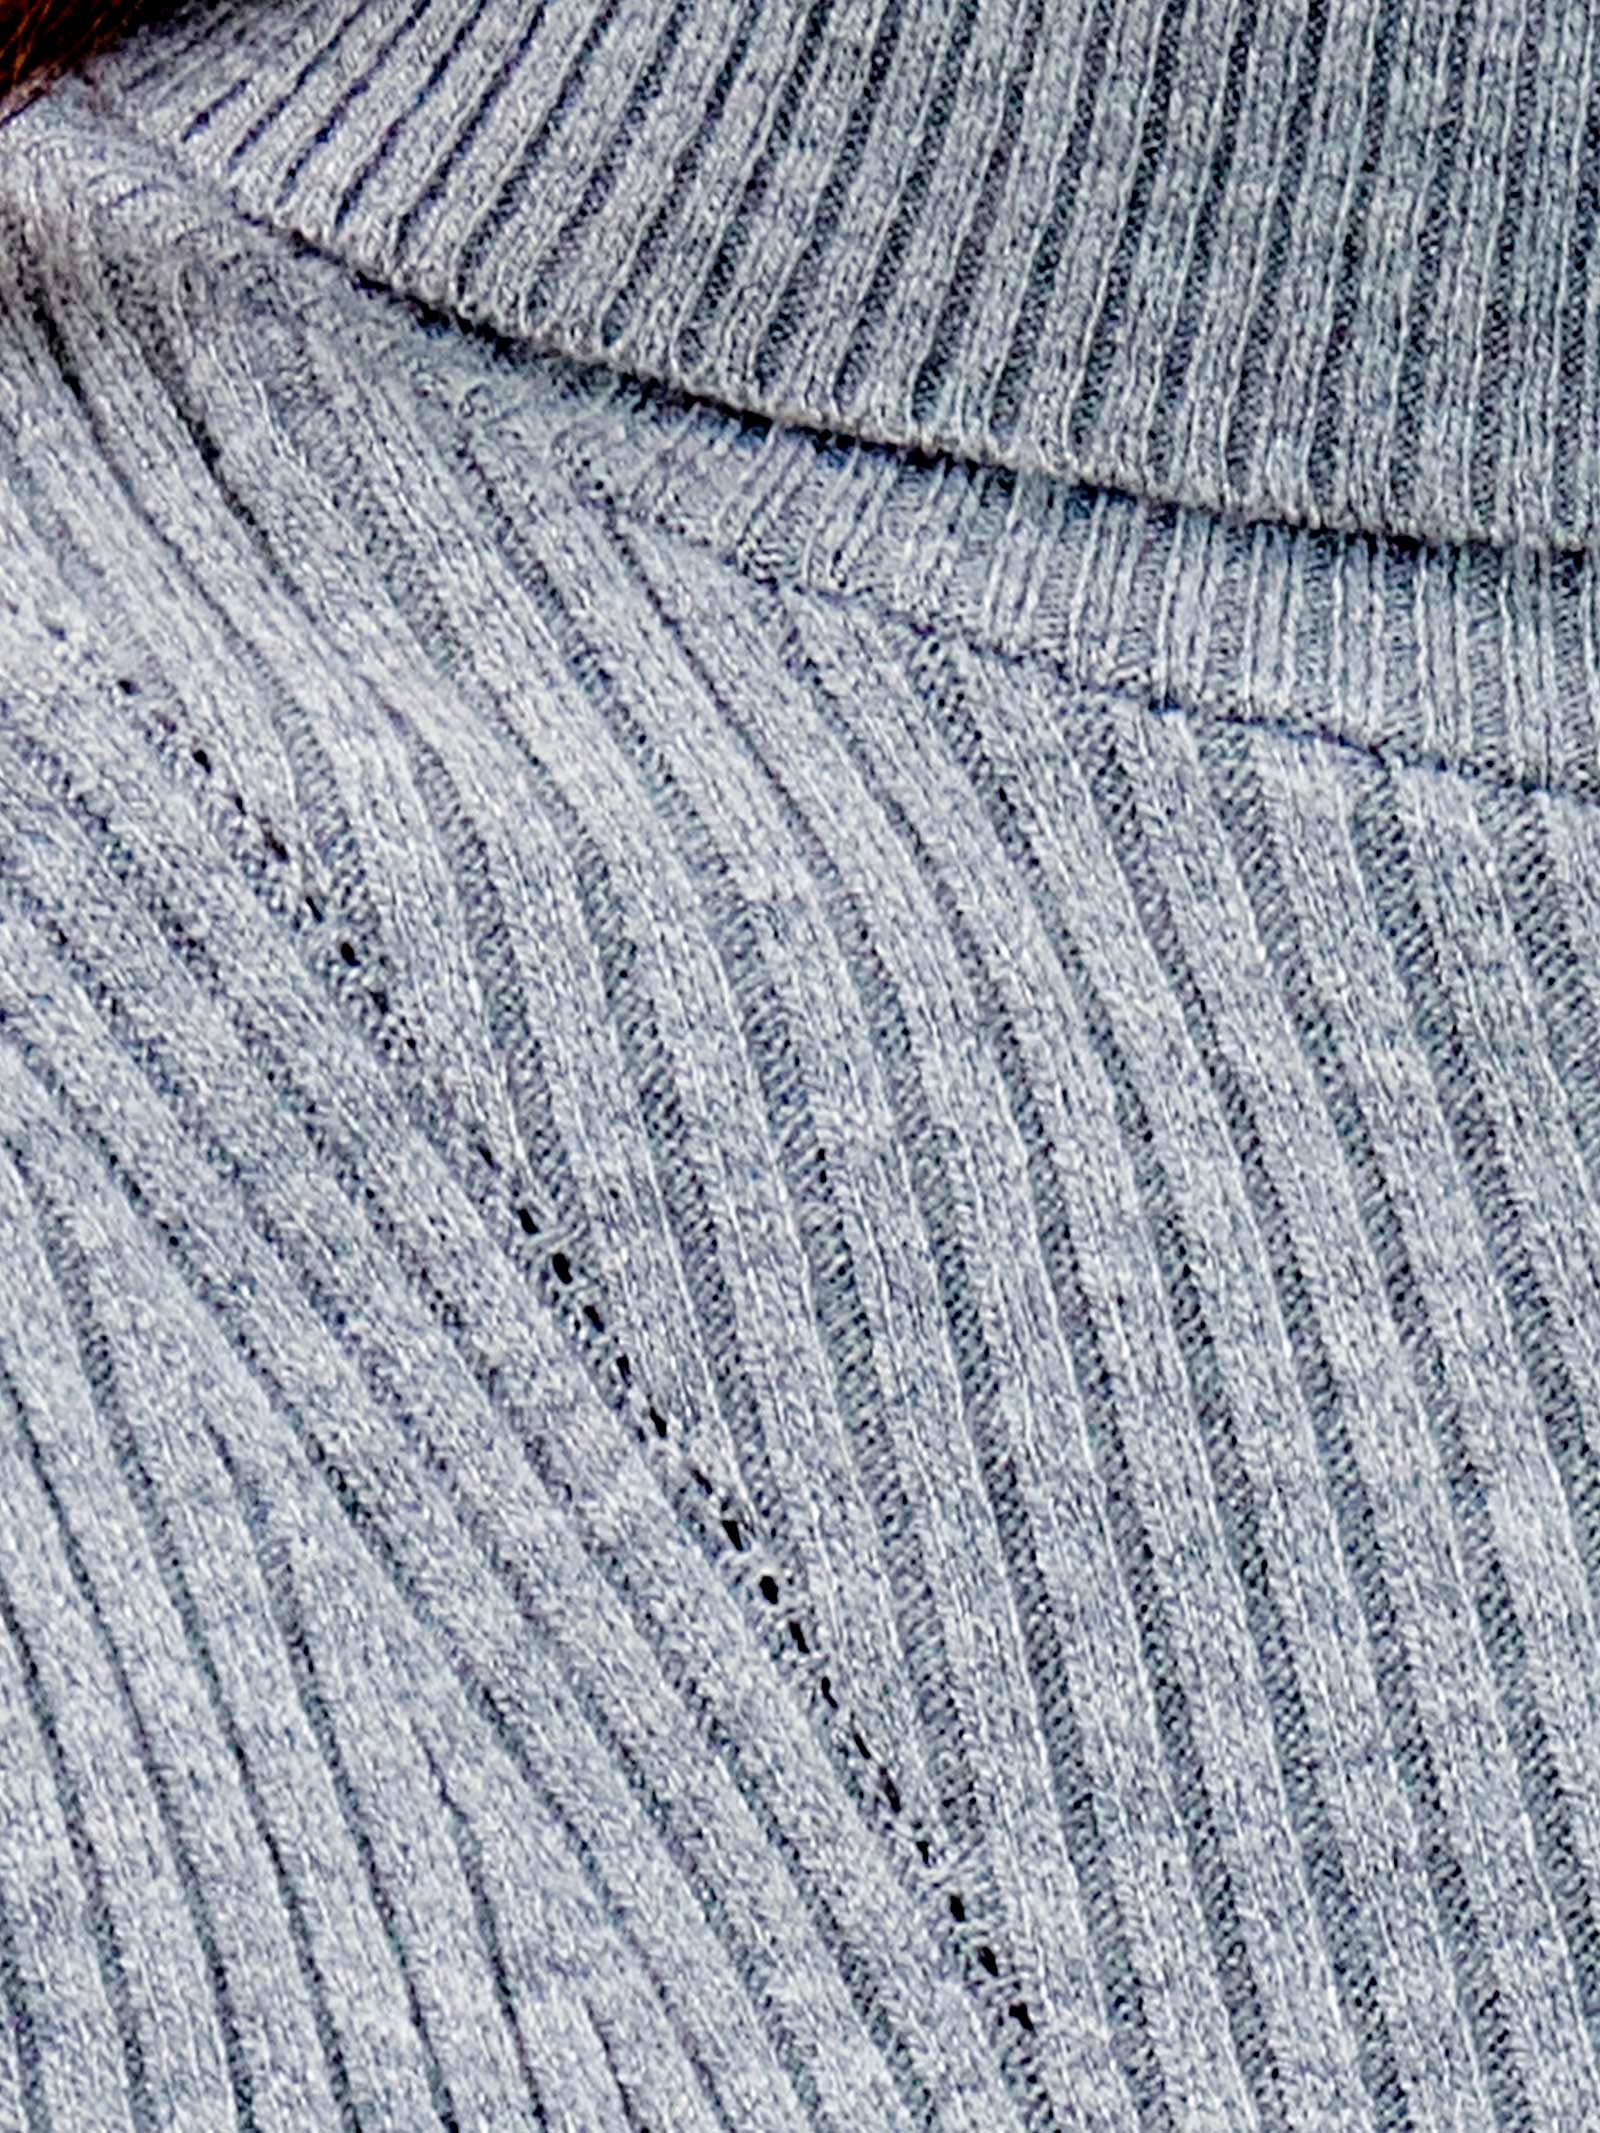 Turtleneck Short Sleeve Sweater light grey